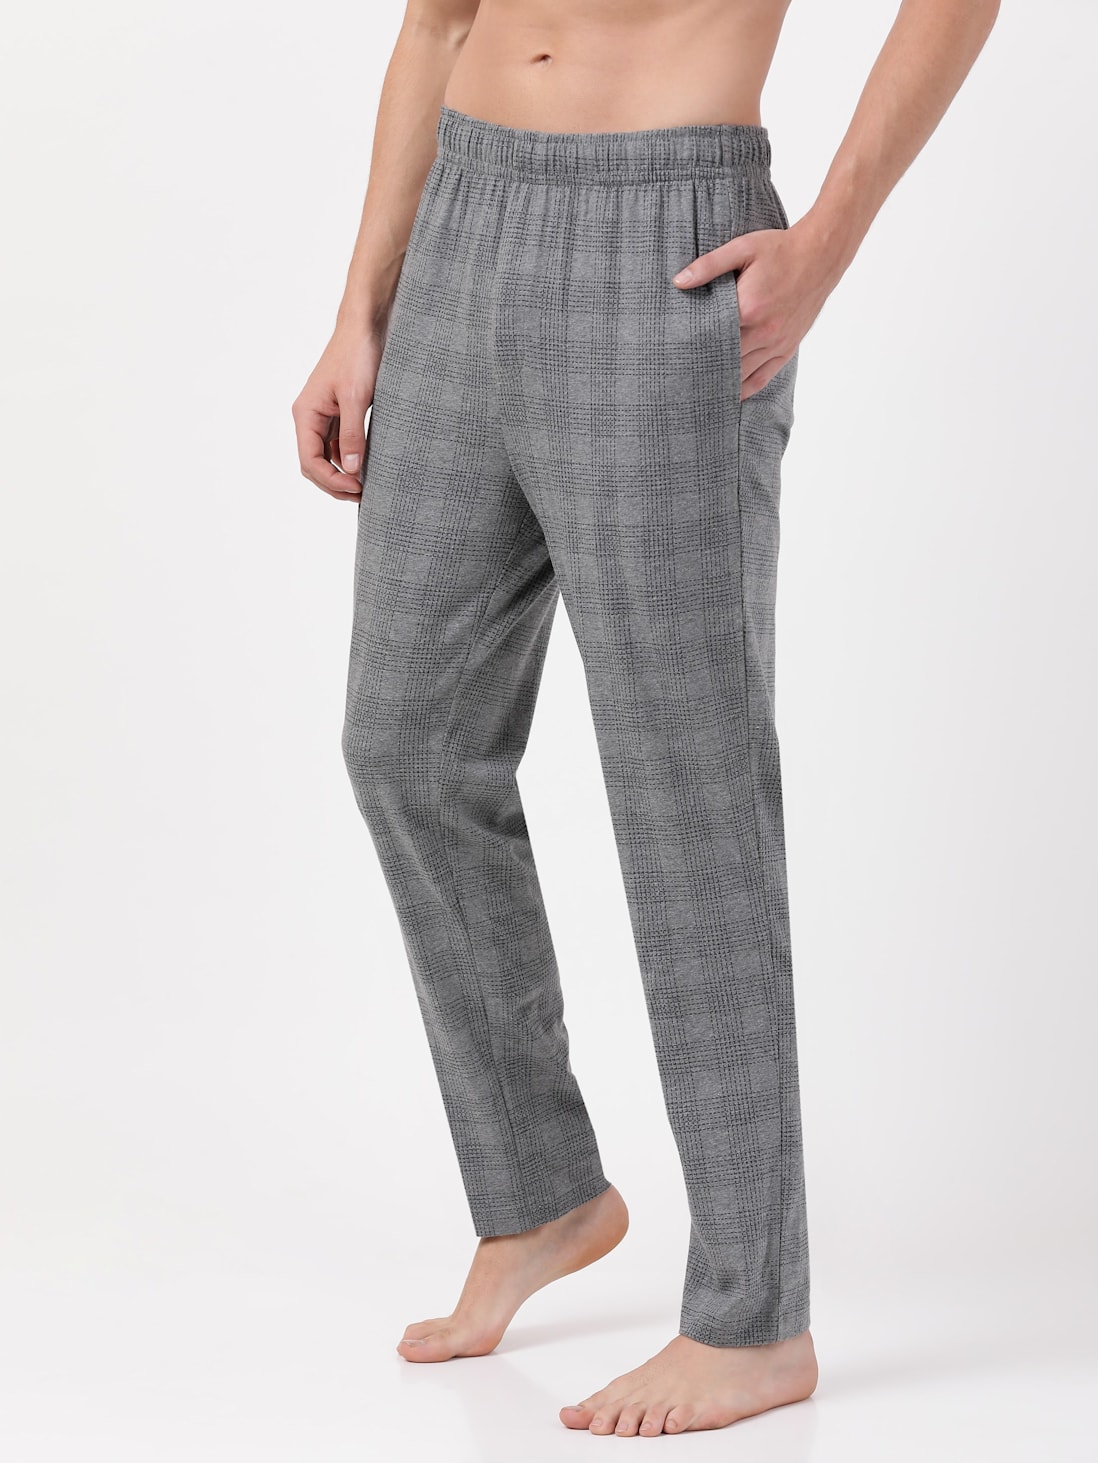 Buy Jockey 9009 Mens Super Combed Cotton Satin Weave Fabric Regular Fit  Printed Pyjama with Side Pockets Prints May VaryBlack Assorted PrintsS  at Amazonin